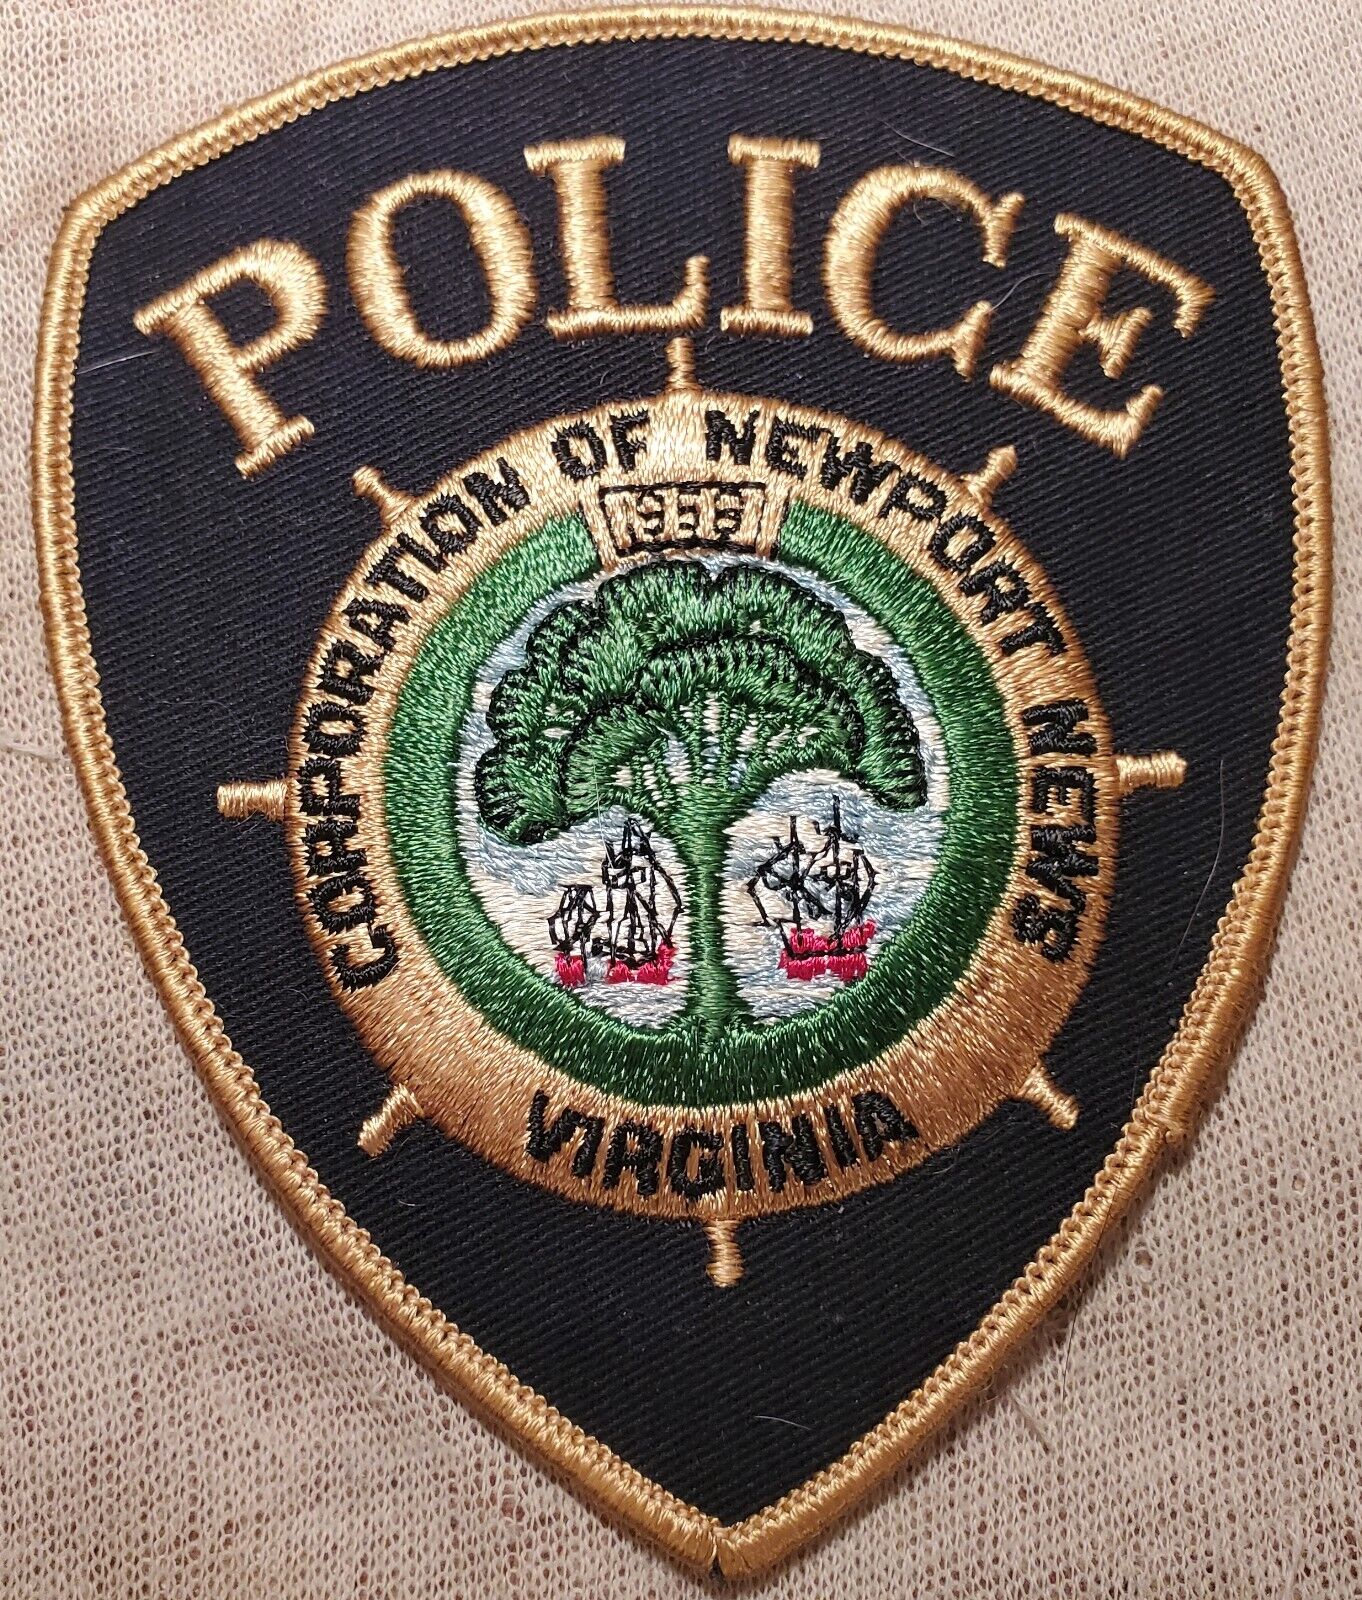 VA Newport News Virginia Police Shoulder Patch (Gold Border)